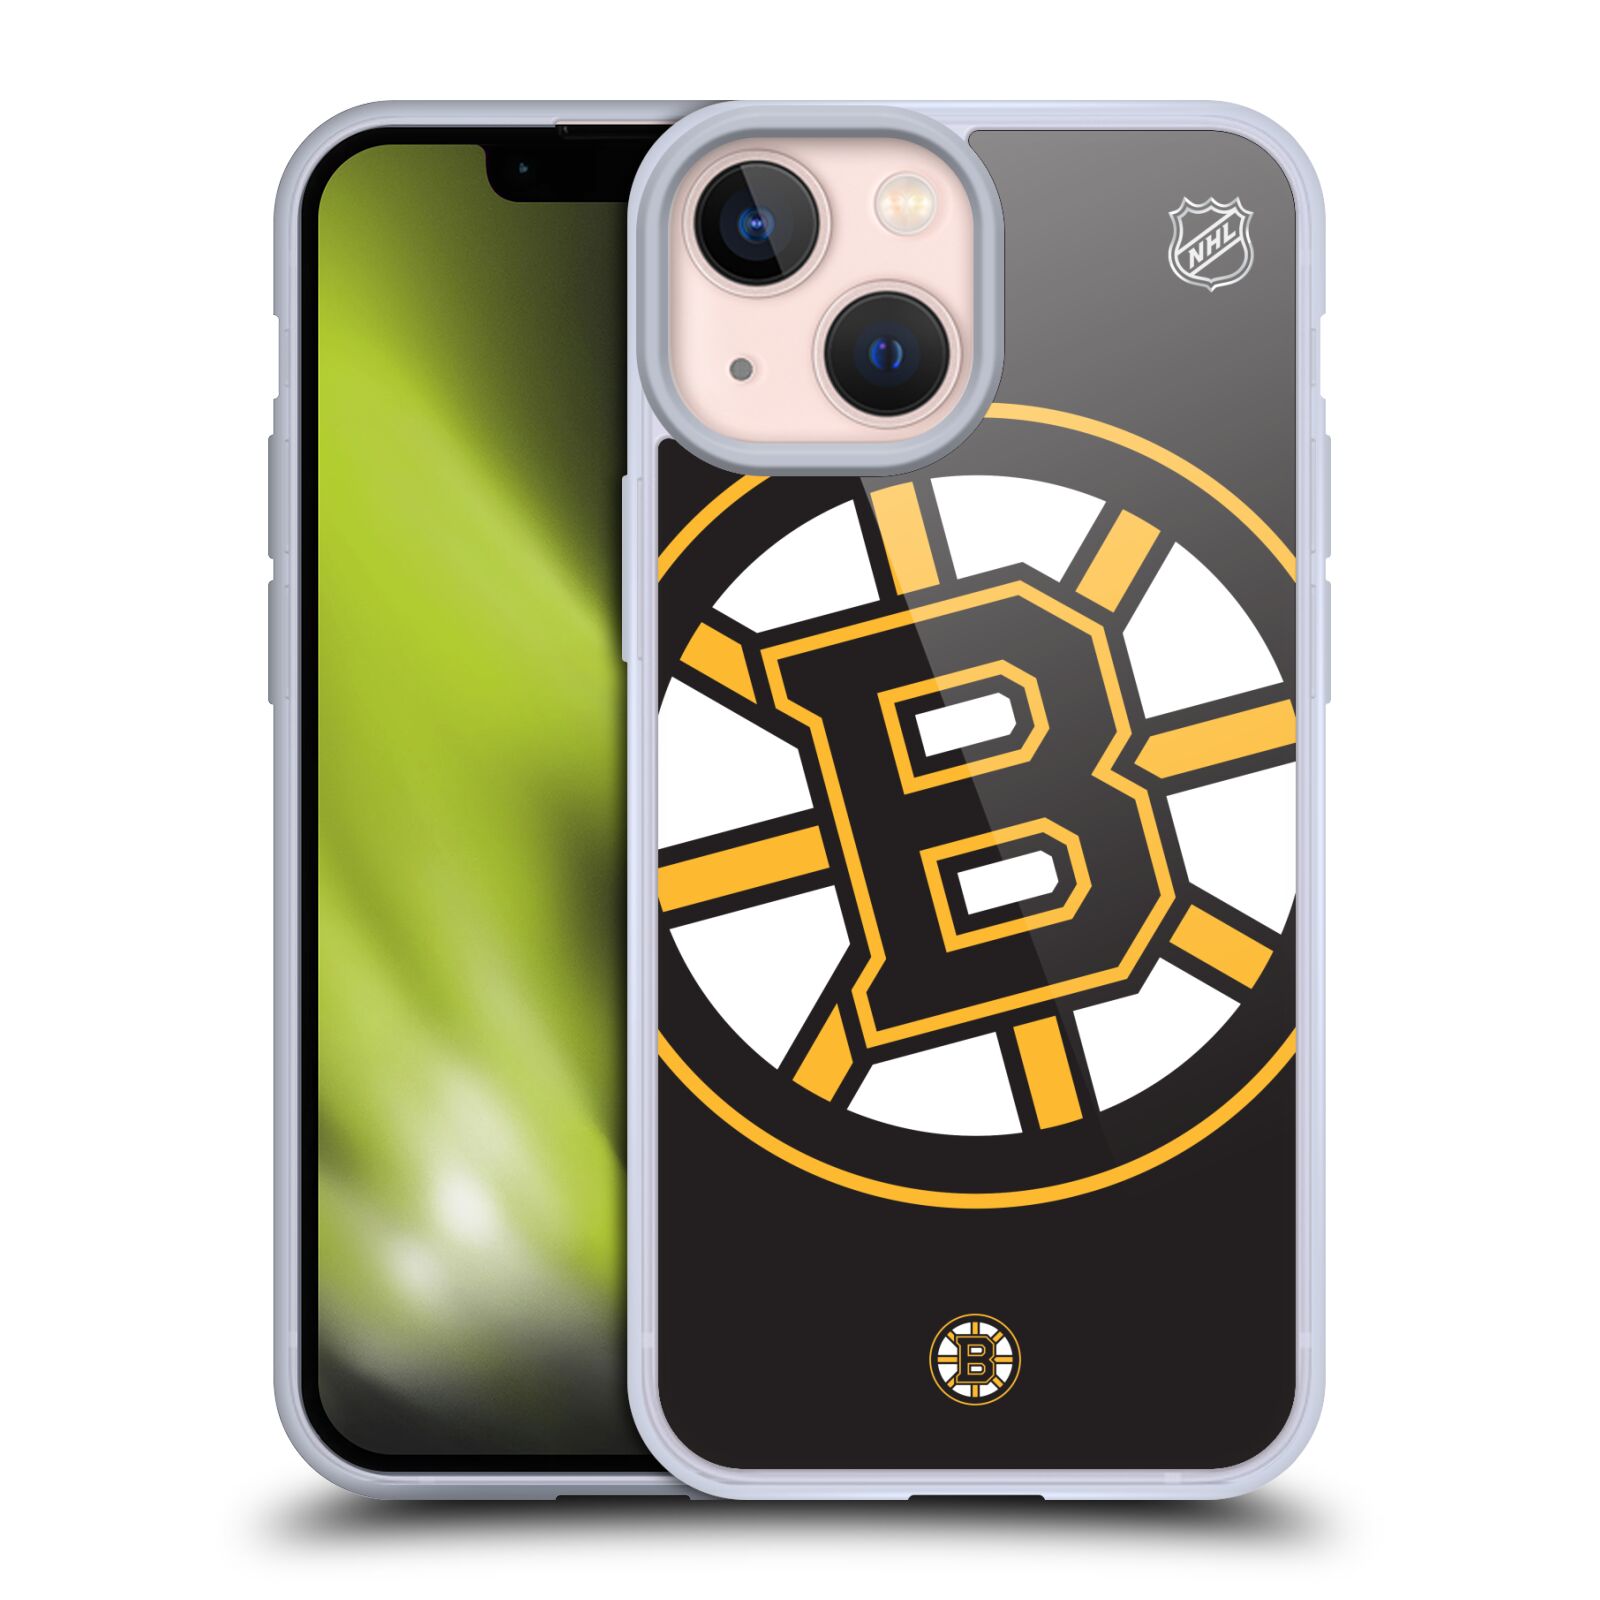 Silikonové pouzdro na mobil Apple iPhone 13 Mini - NHL - Velké logo Boston Bruins (Silikonový kryt, obal, pouzdro na mobilní telefon Apple iPhone 13 Mini s licencovaným motivem NHL - Velké logo Boston Bruins)